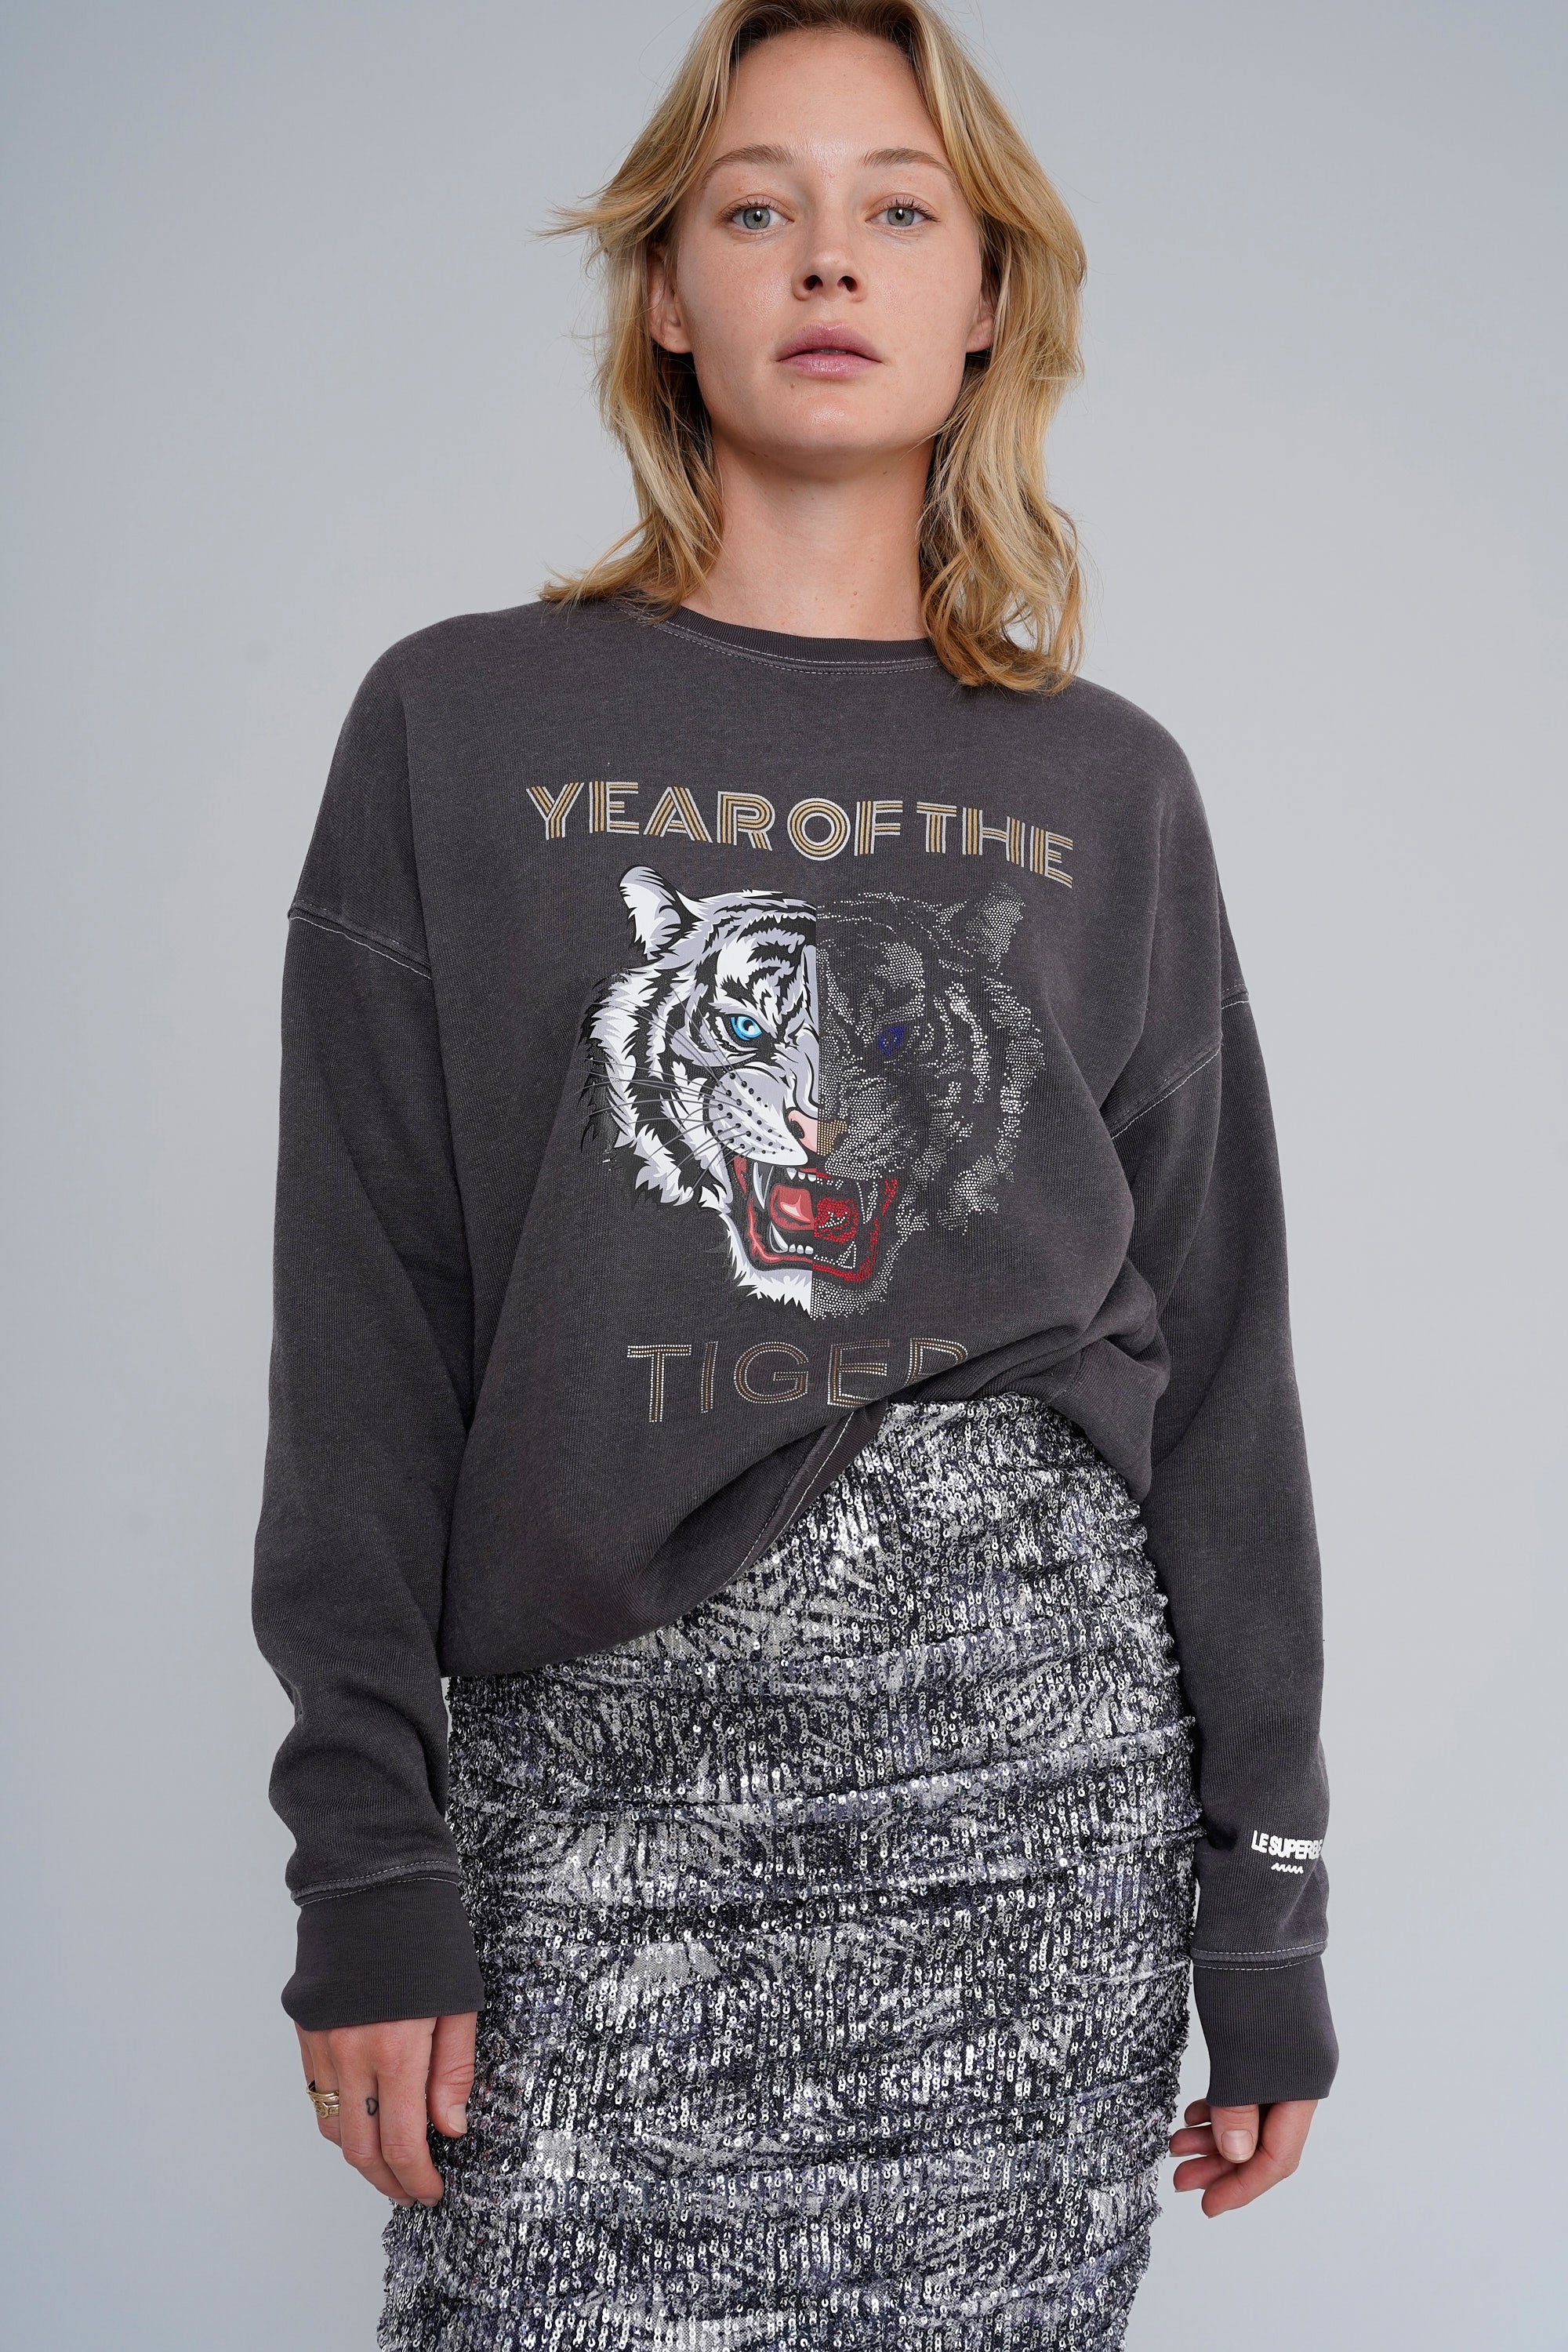 Year Of The Tiger Sweatshirt